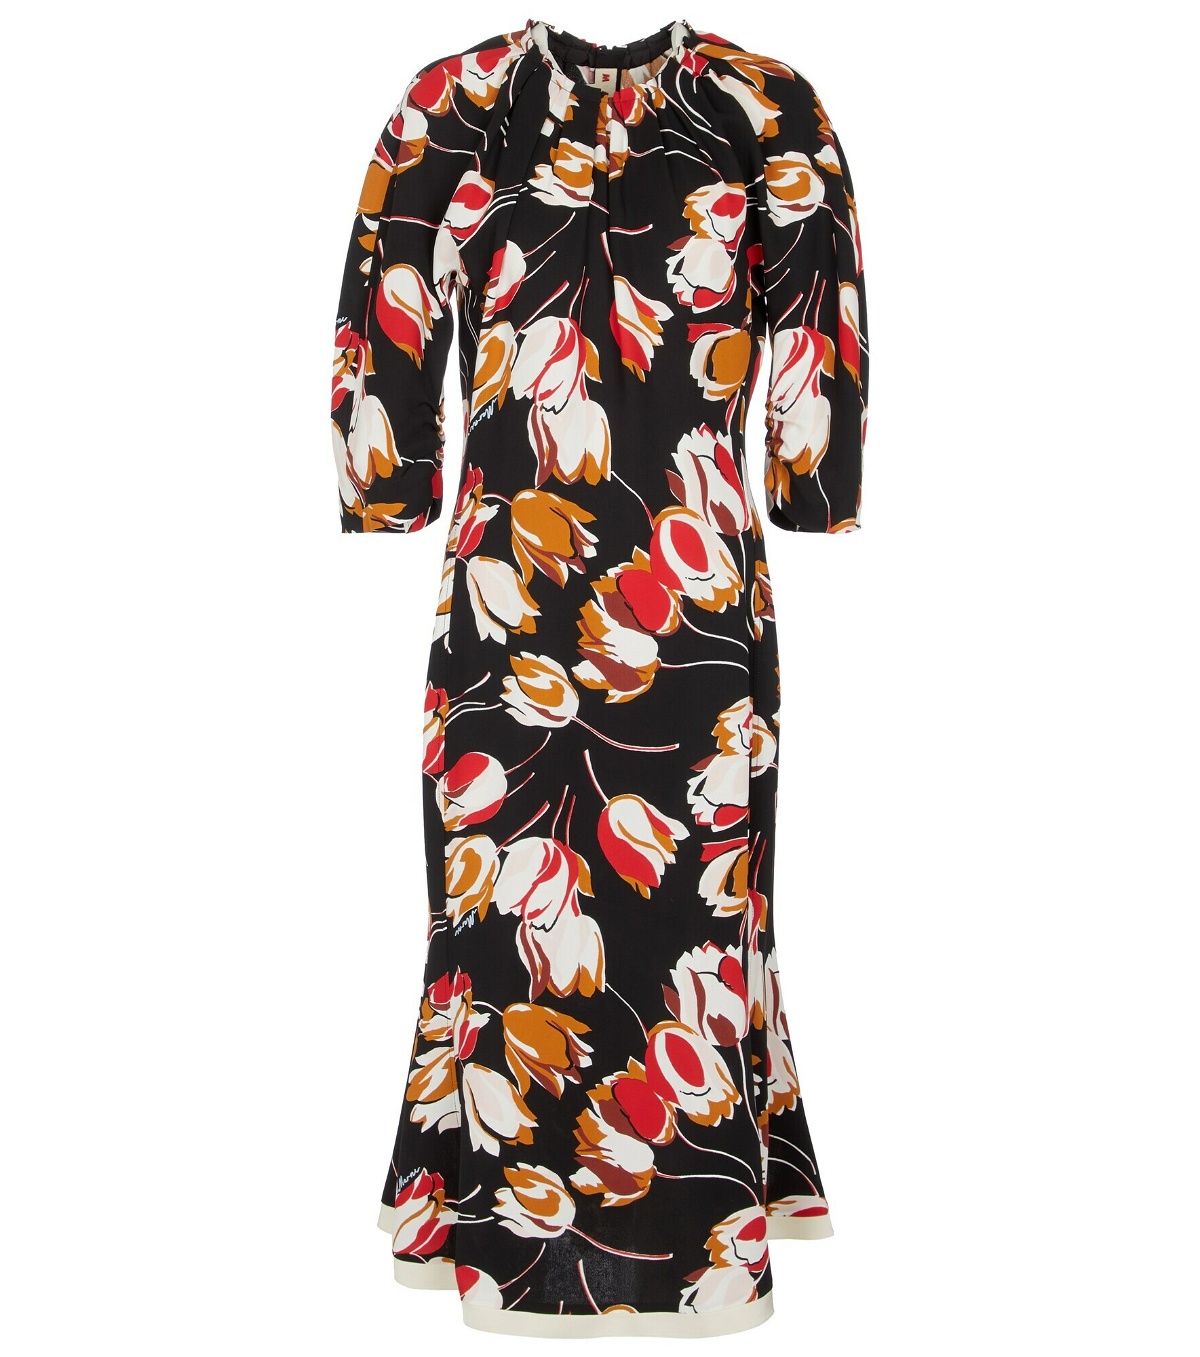 Marni - Floral-printed dress Marni